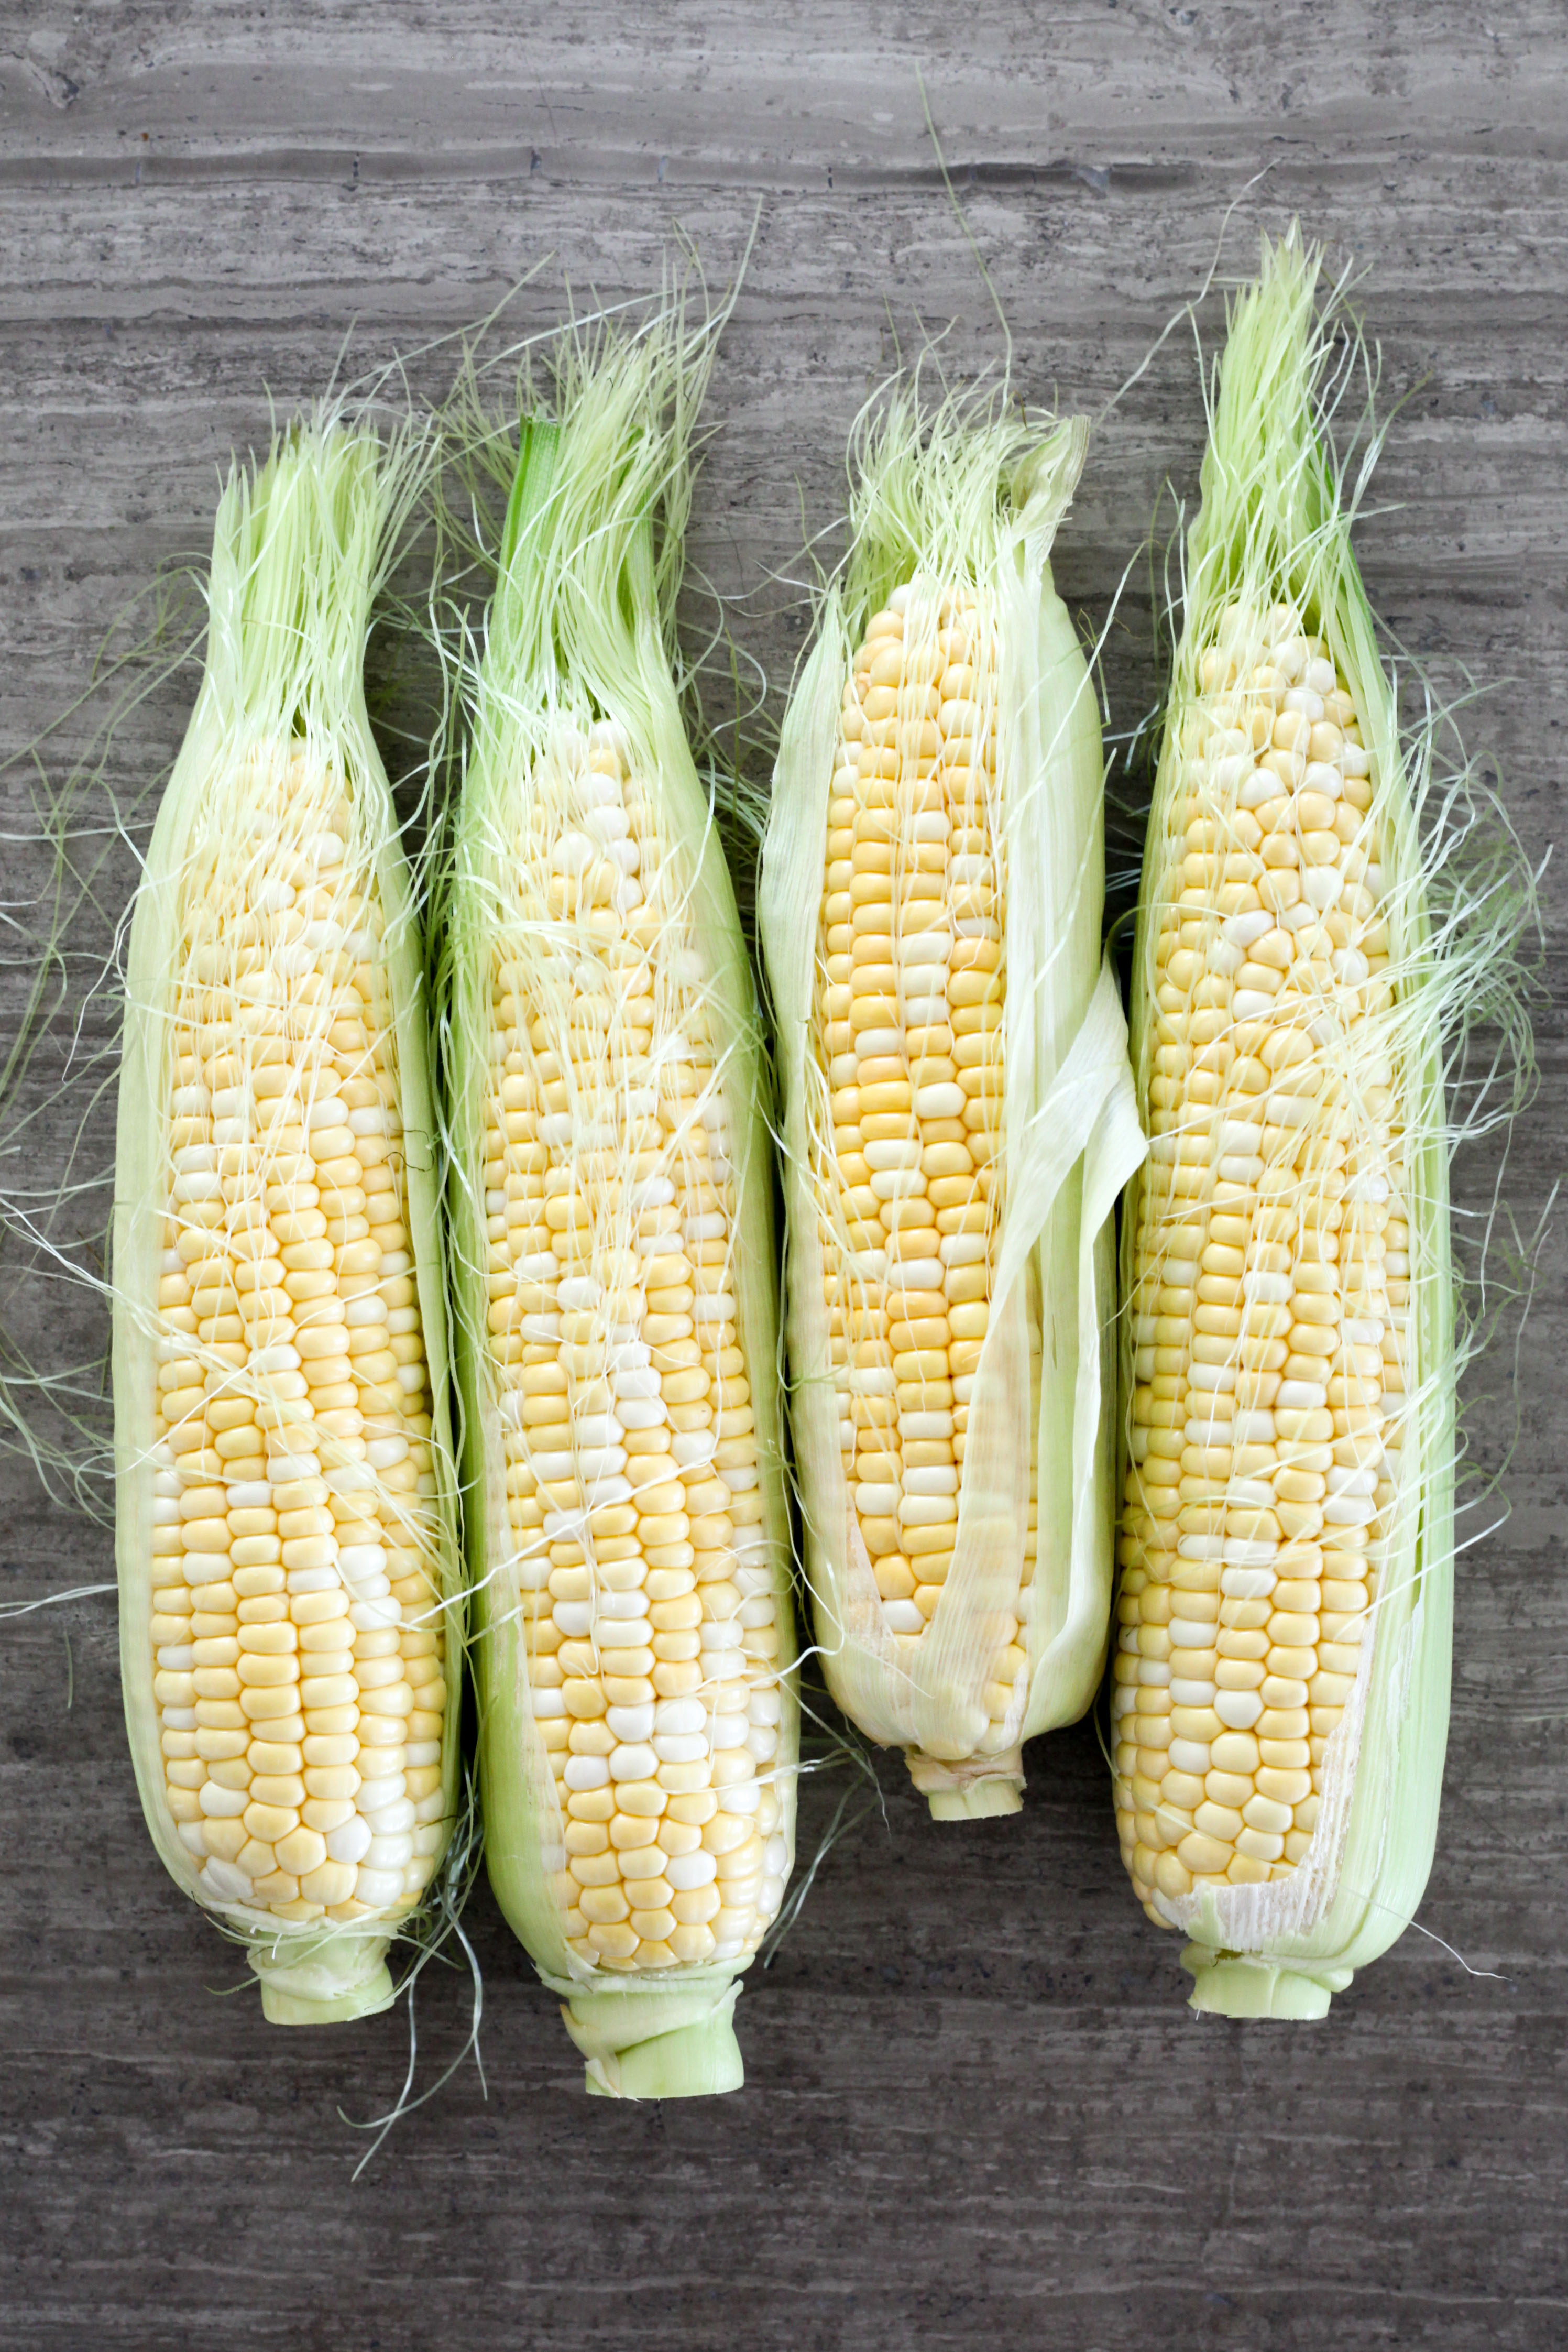 Partially-shucked corn on the cob